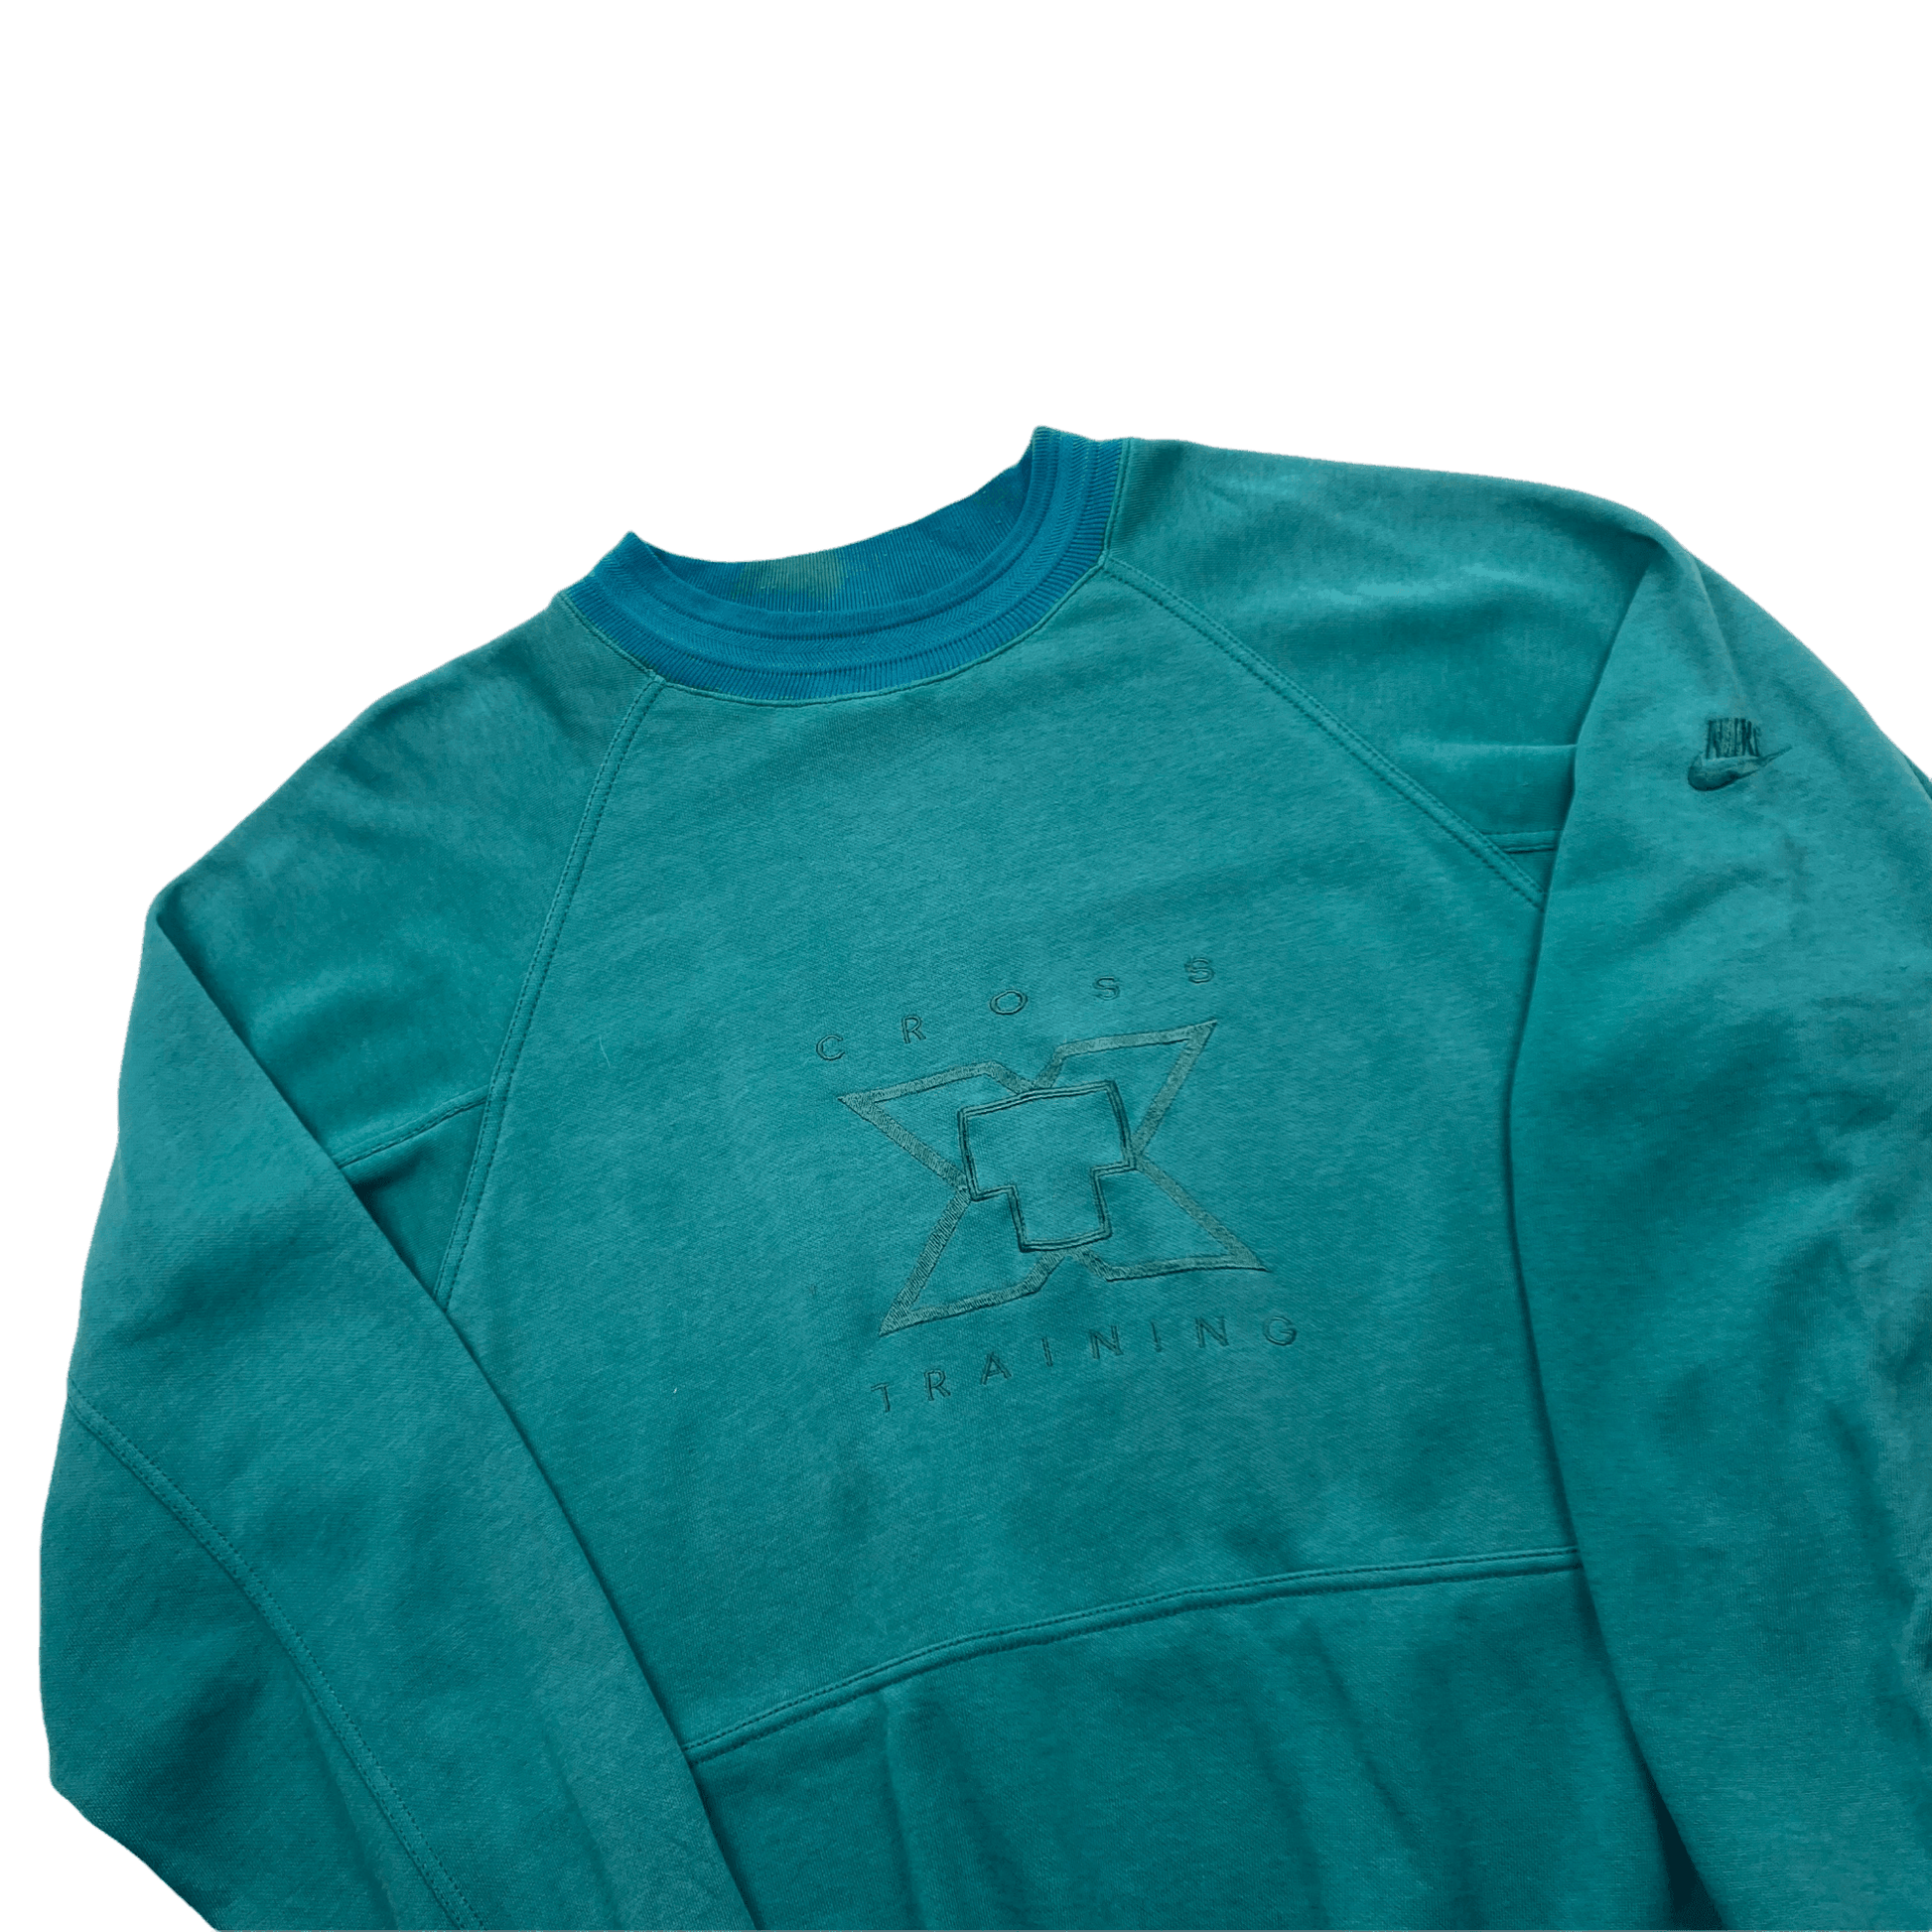 Vintage 90s Green/ Blue Nike Cross Training Spell-Out Sweatshirt - Medium - The Streetwear Studio